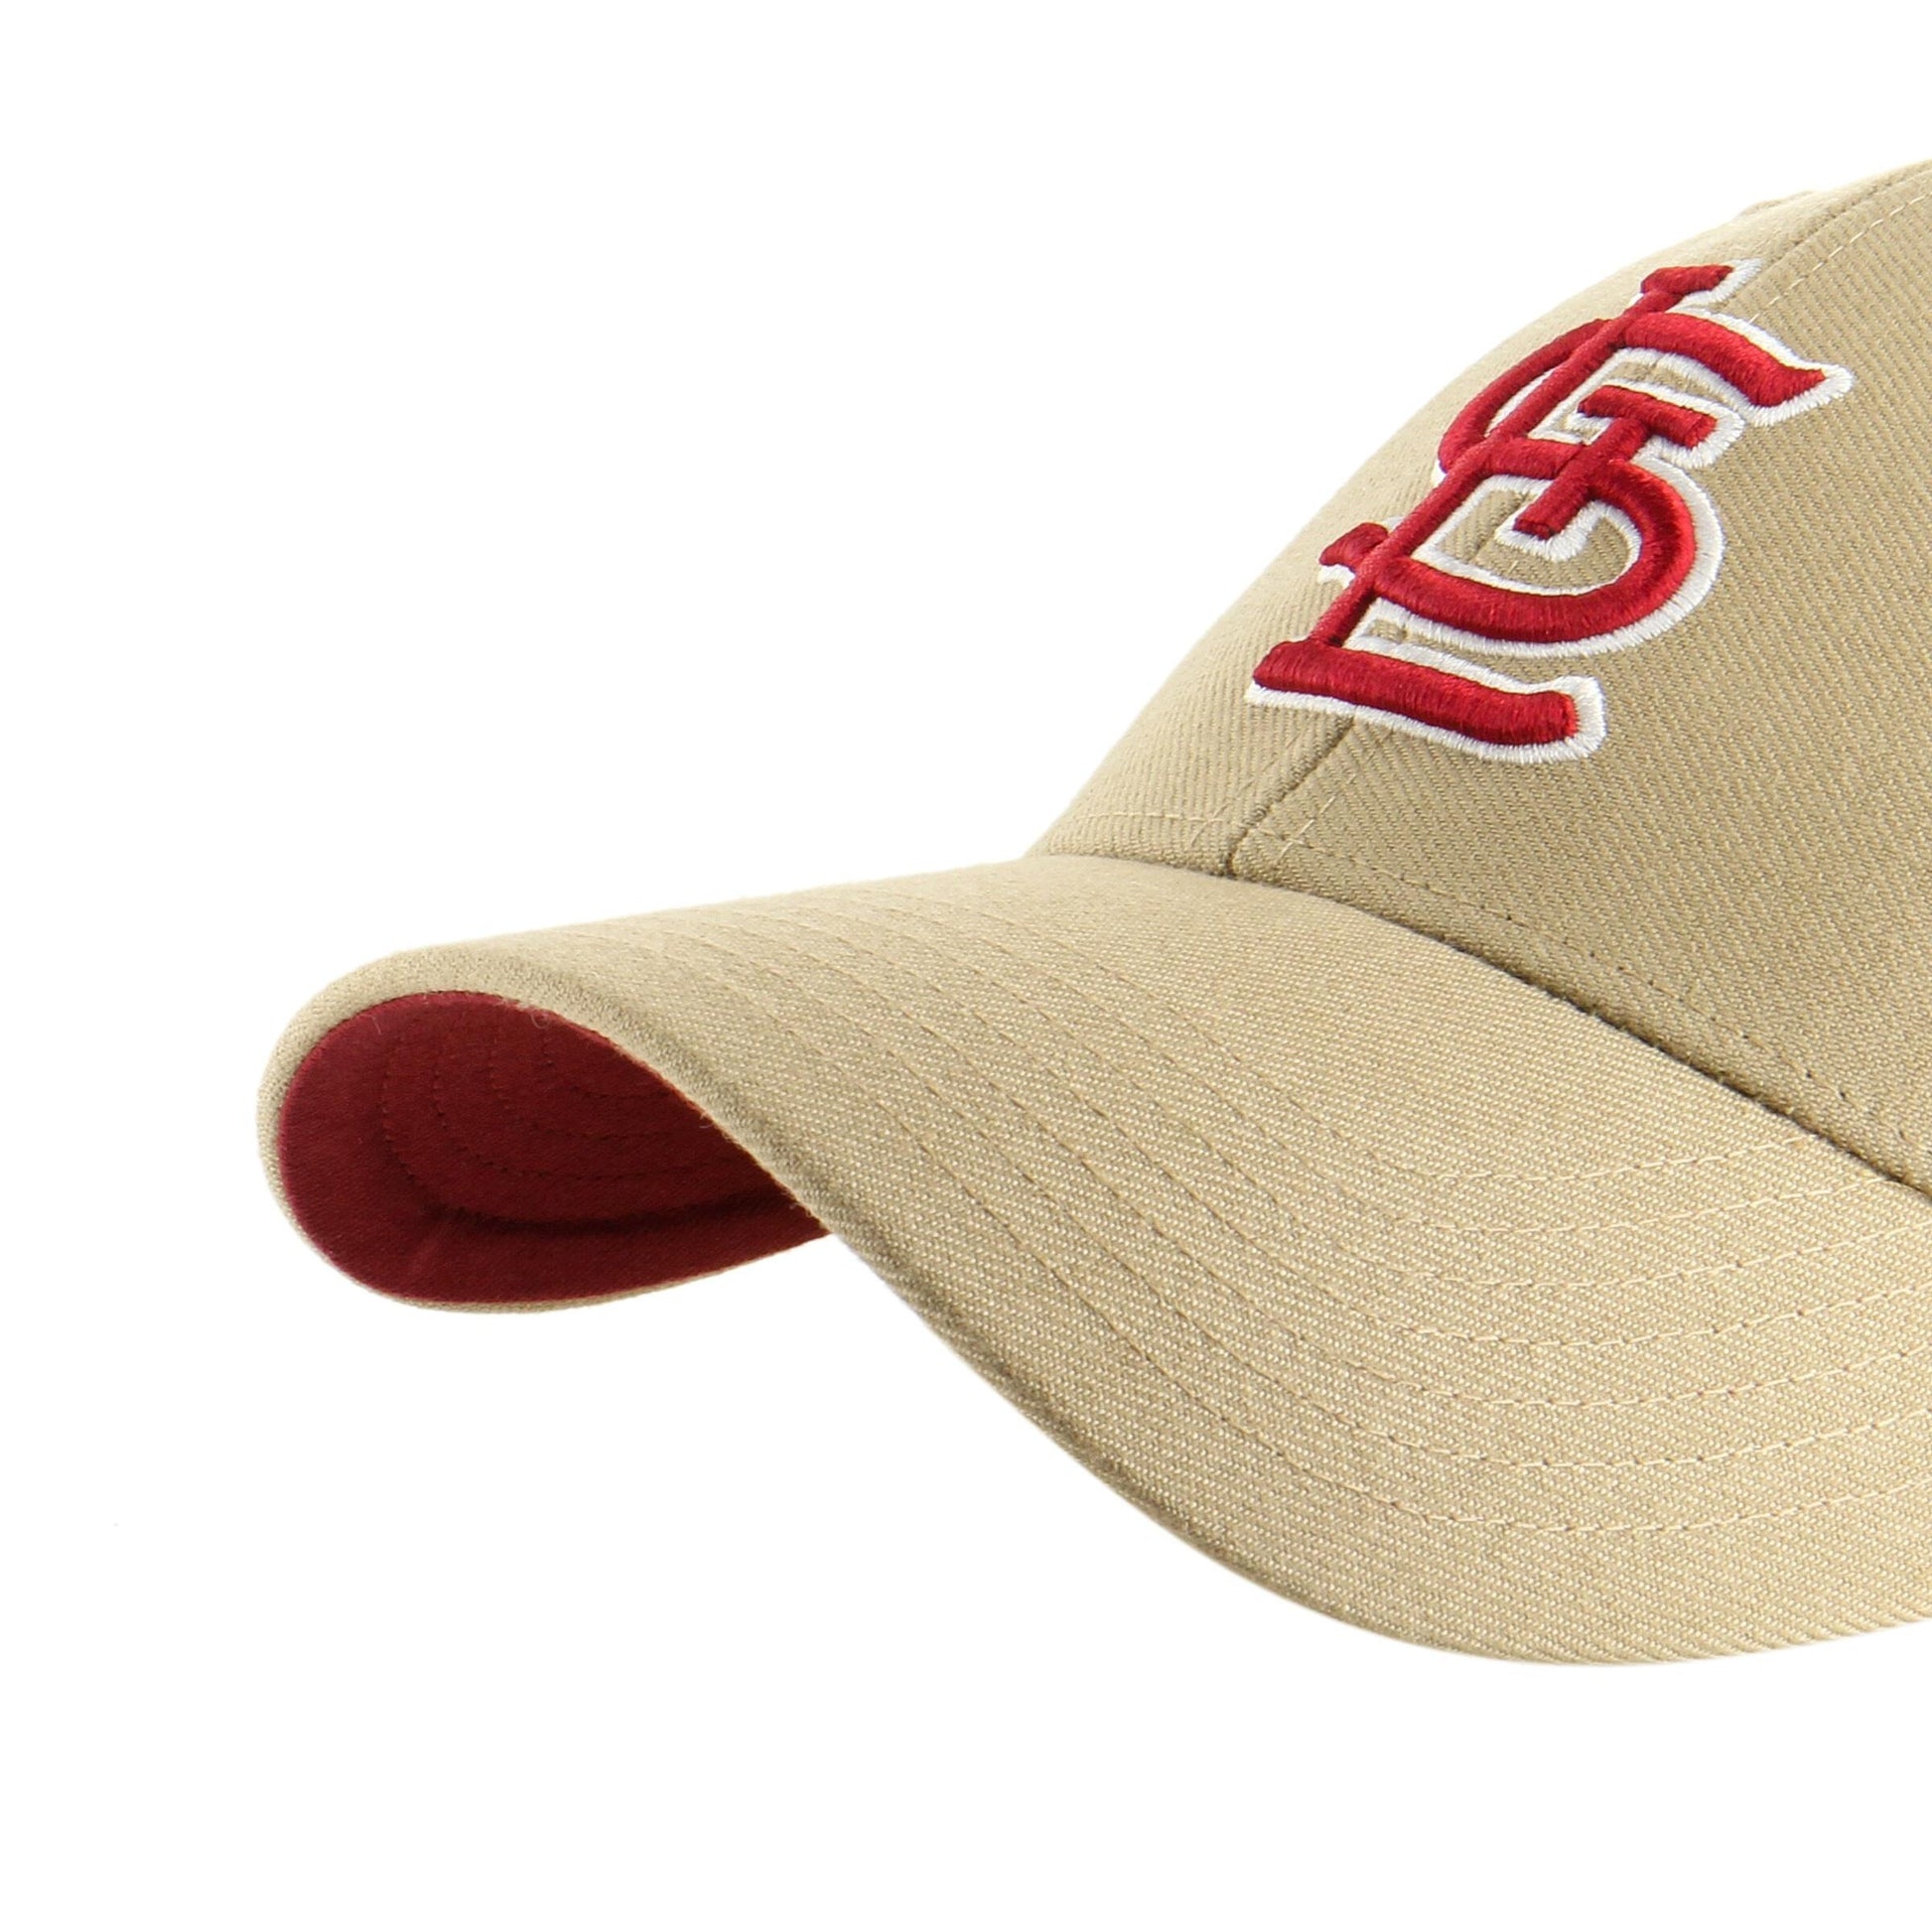 St Louis Cardinals Hat 47 Brand SnapBack MLB